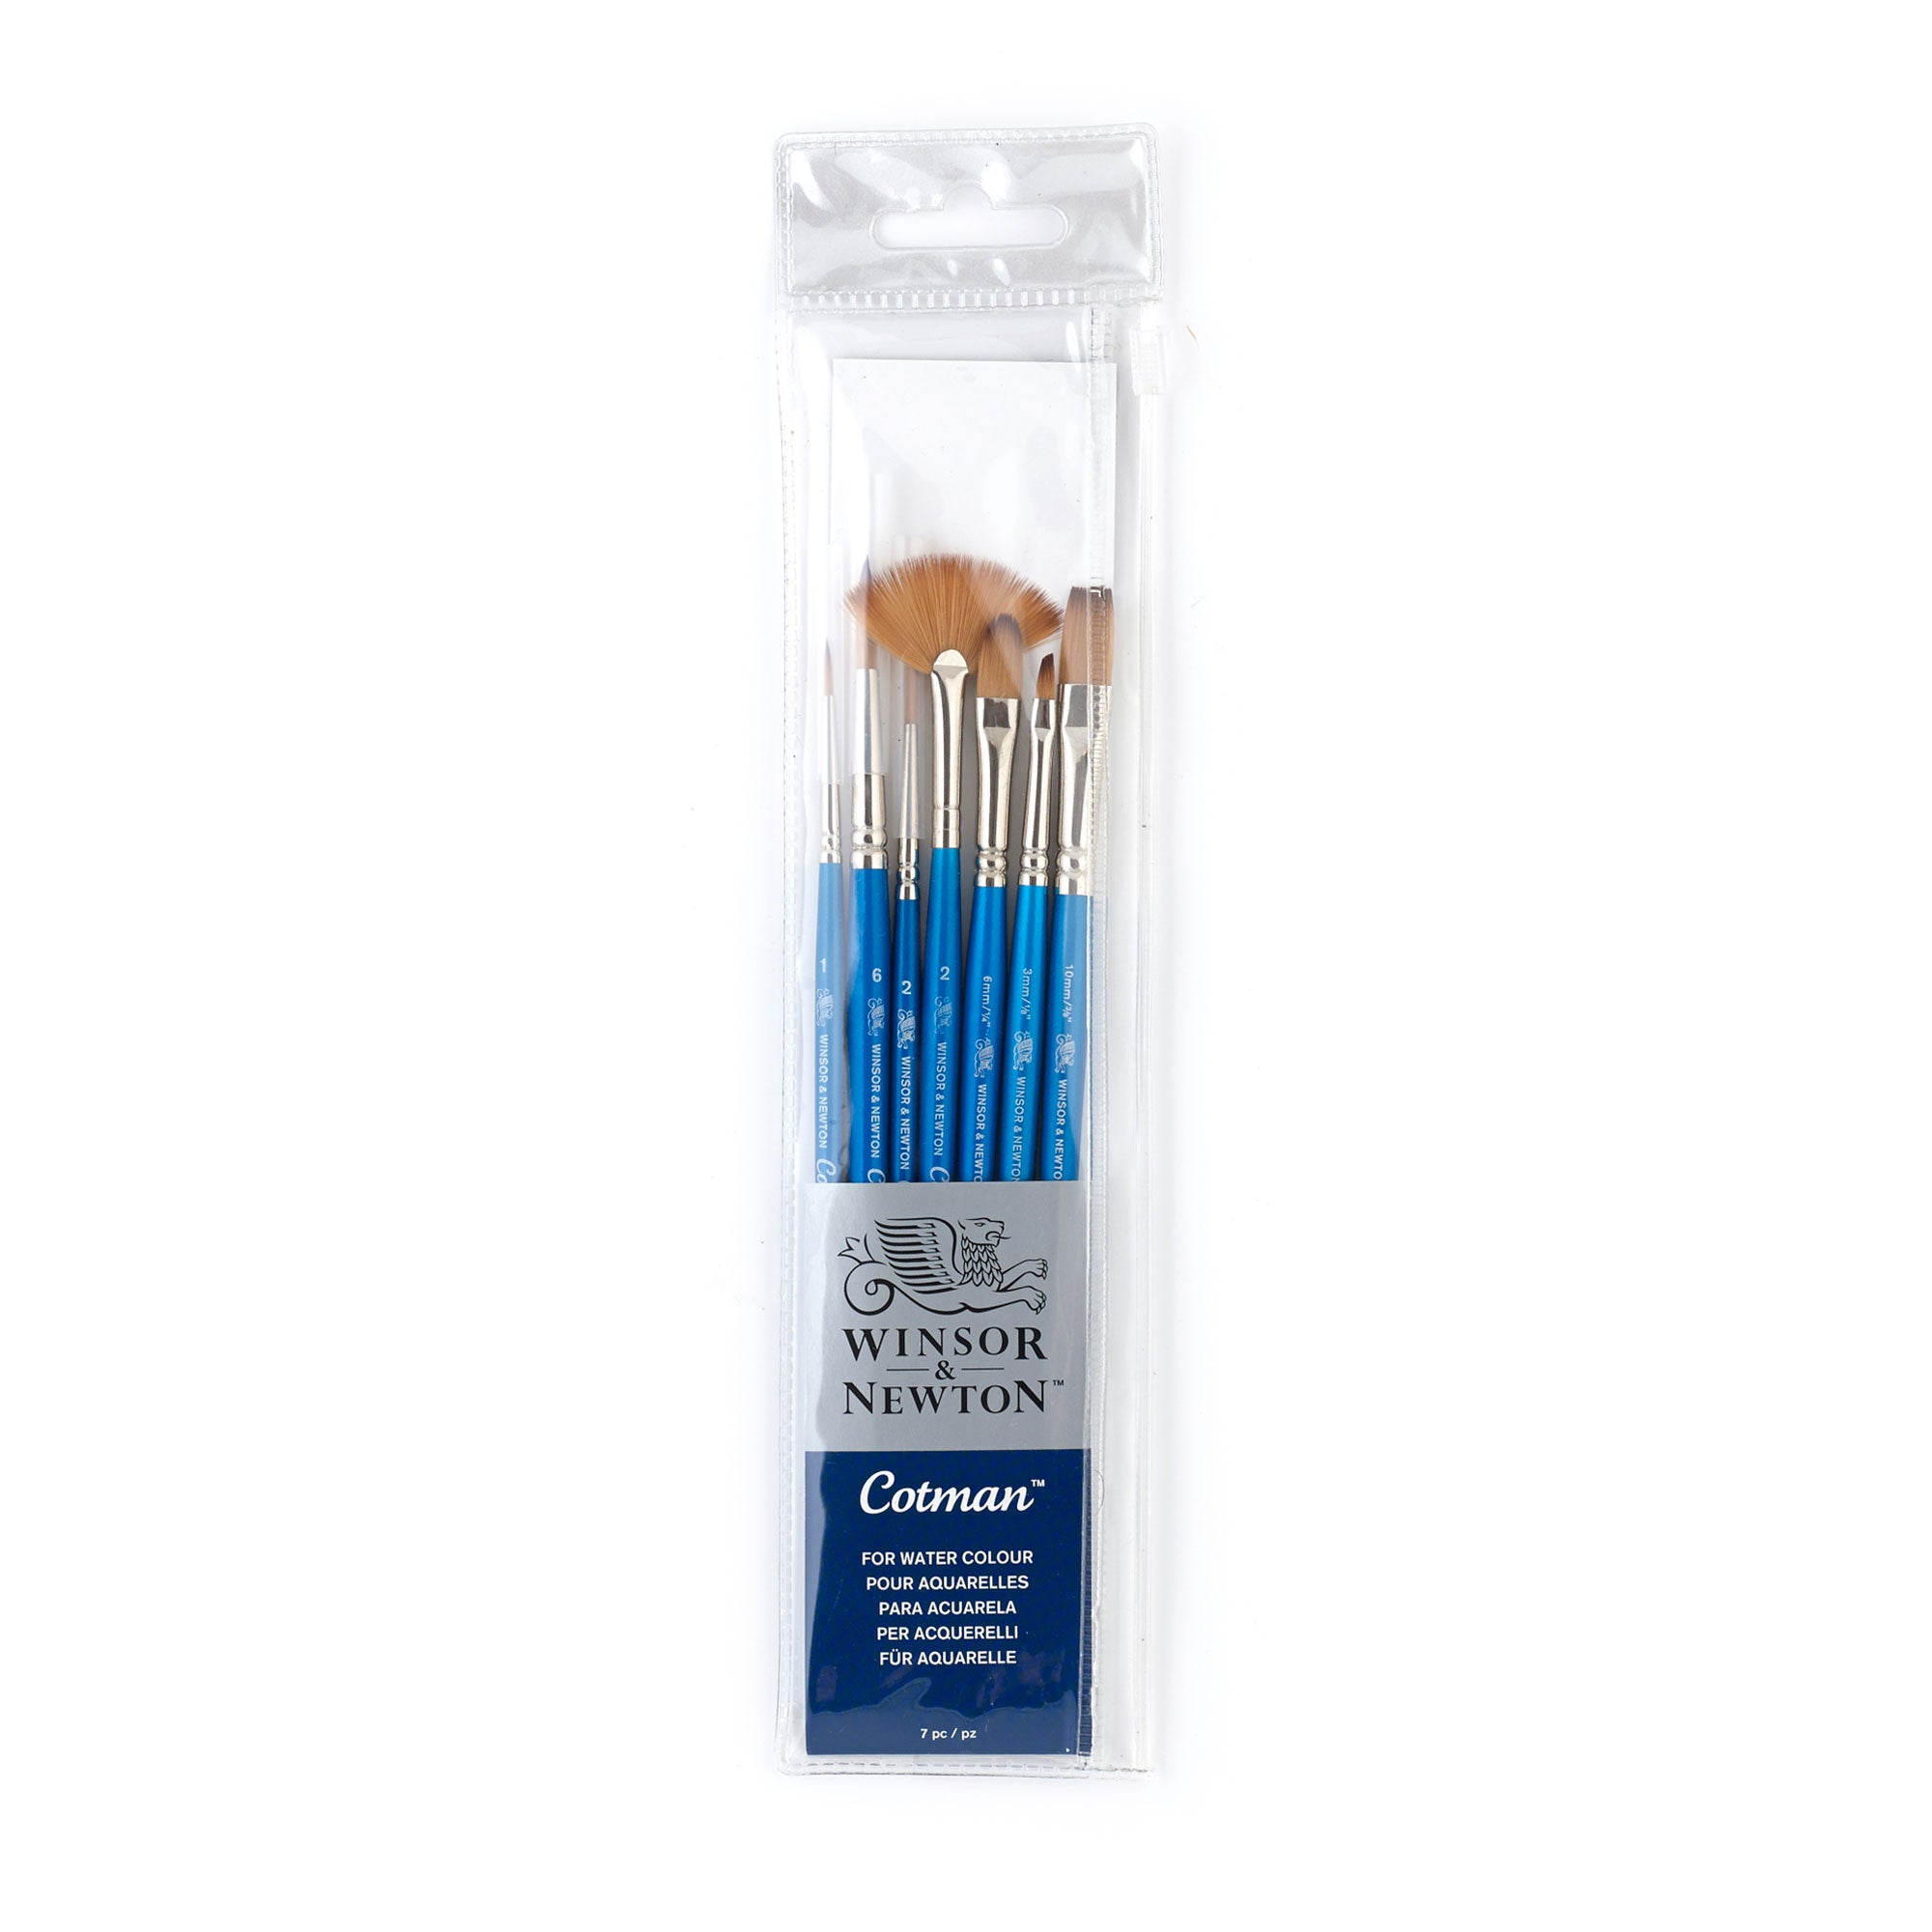 Winsor & Newton Cotman Brush Pen Set